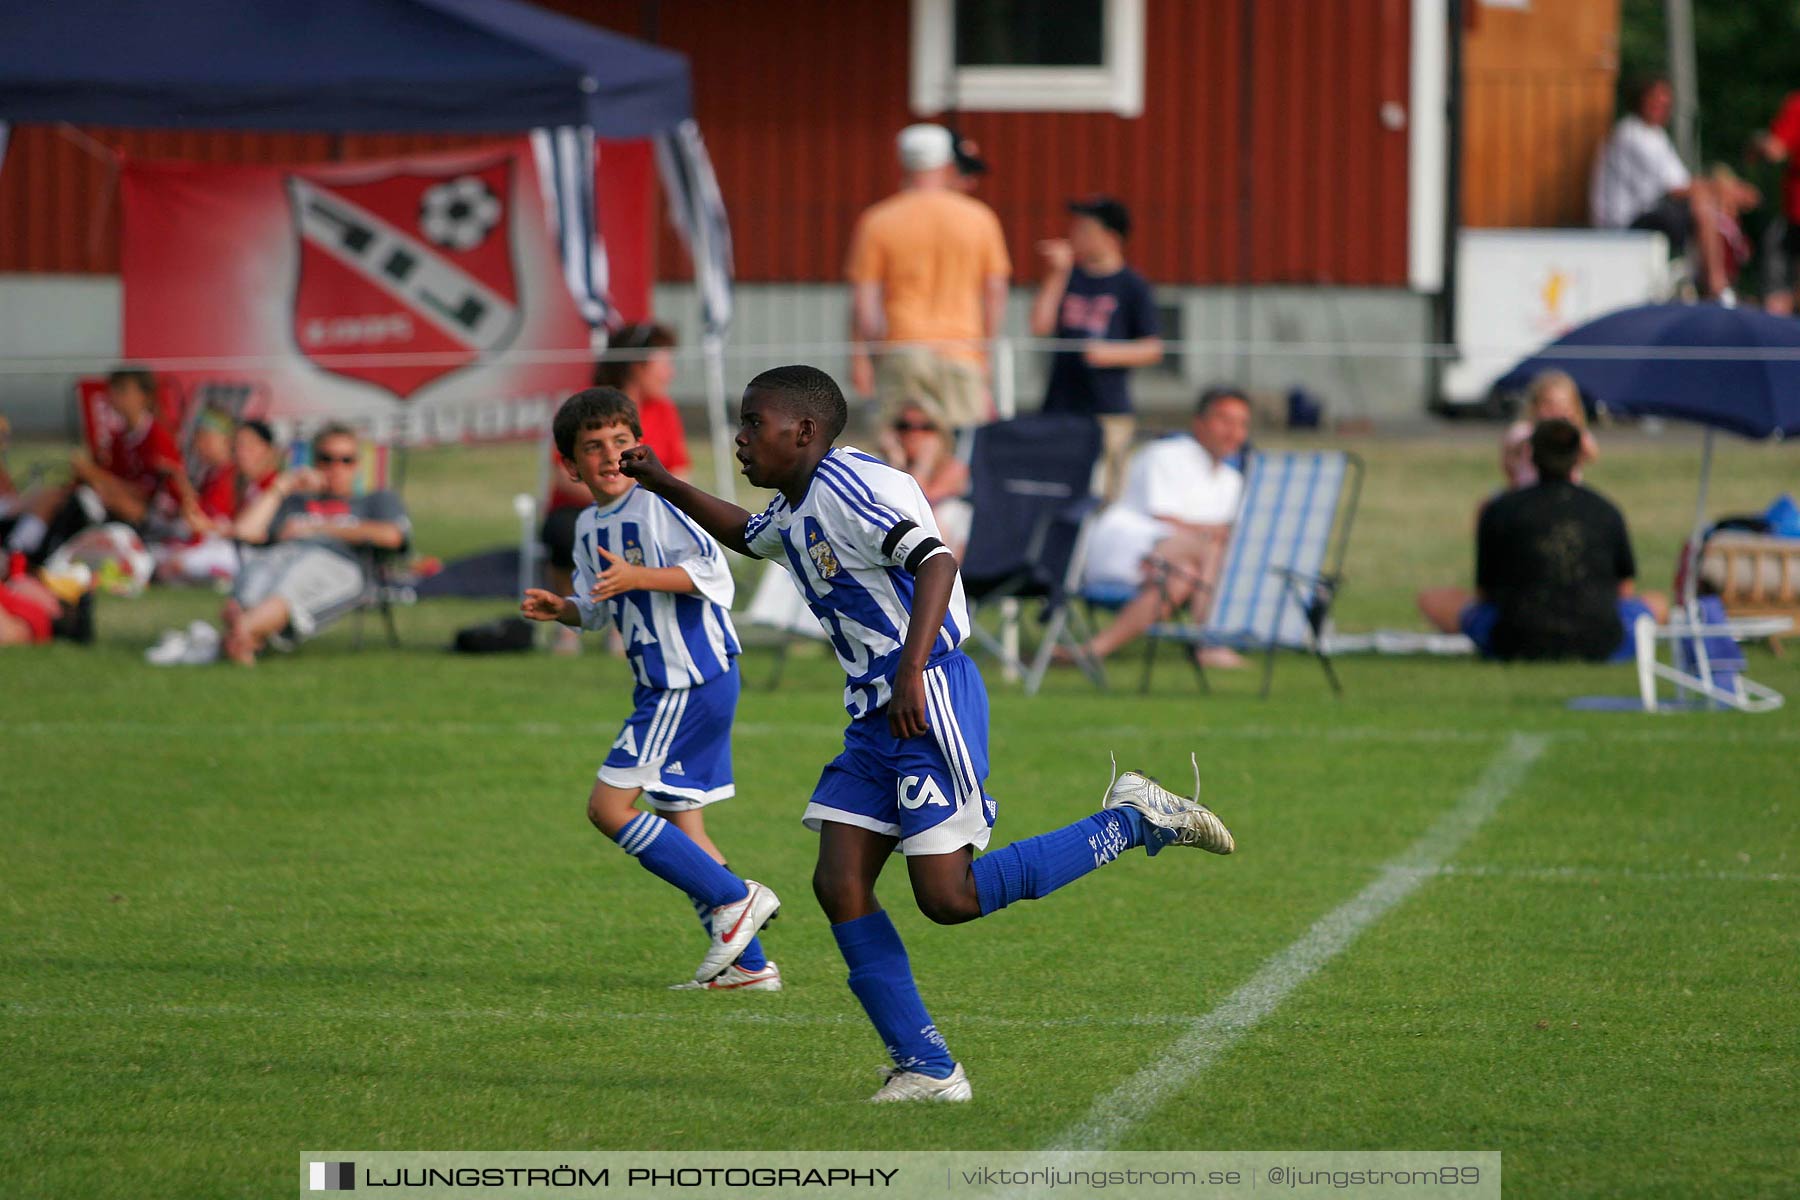 Ulvacupen 2006,mix,Åbrovallen,Ulvåker,Sverige,Fotboll,,2006,147444